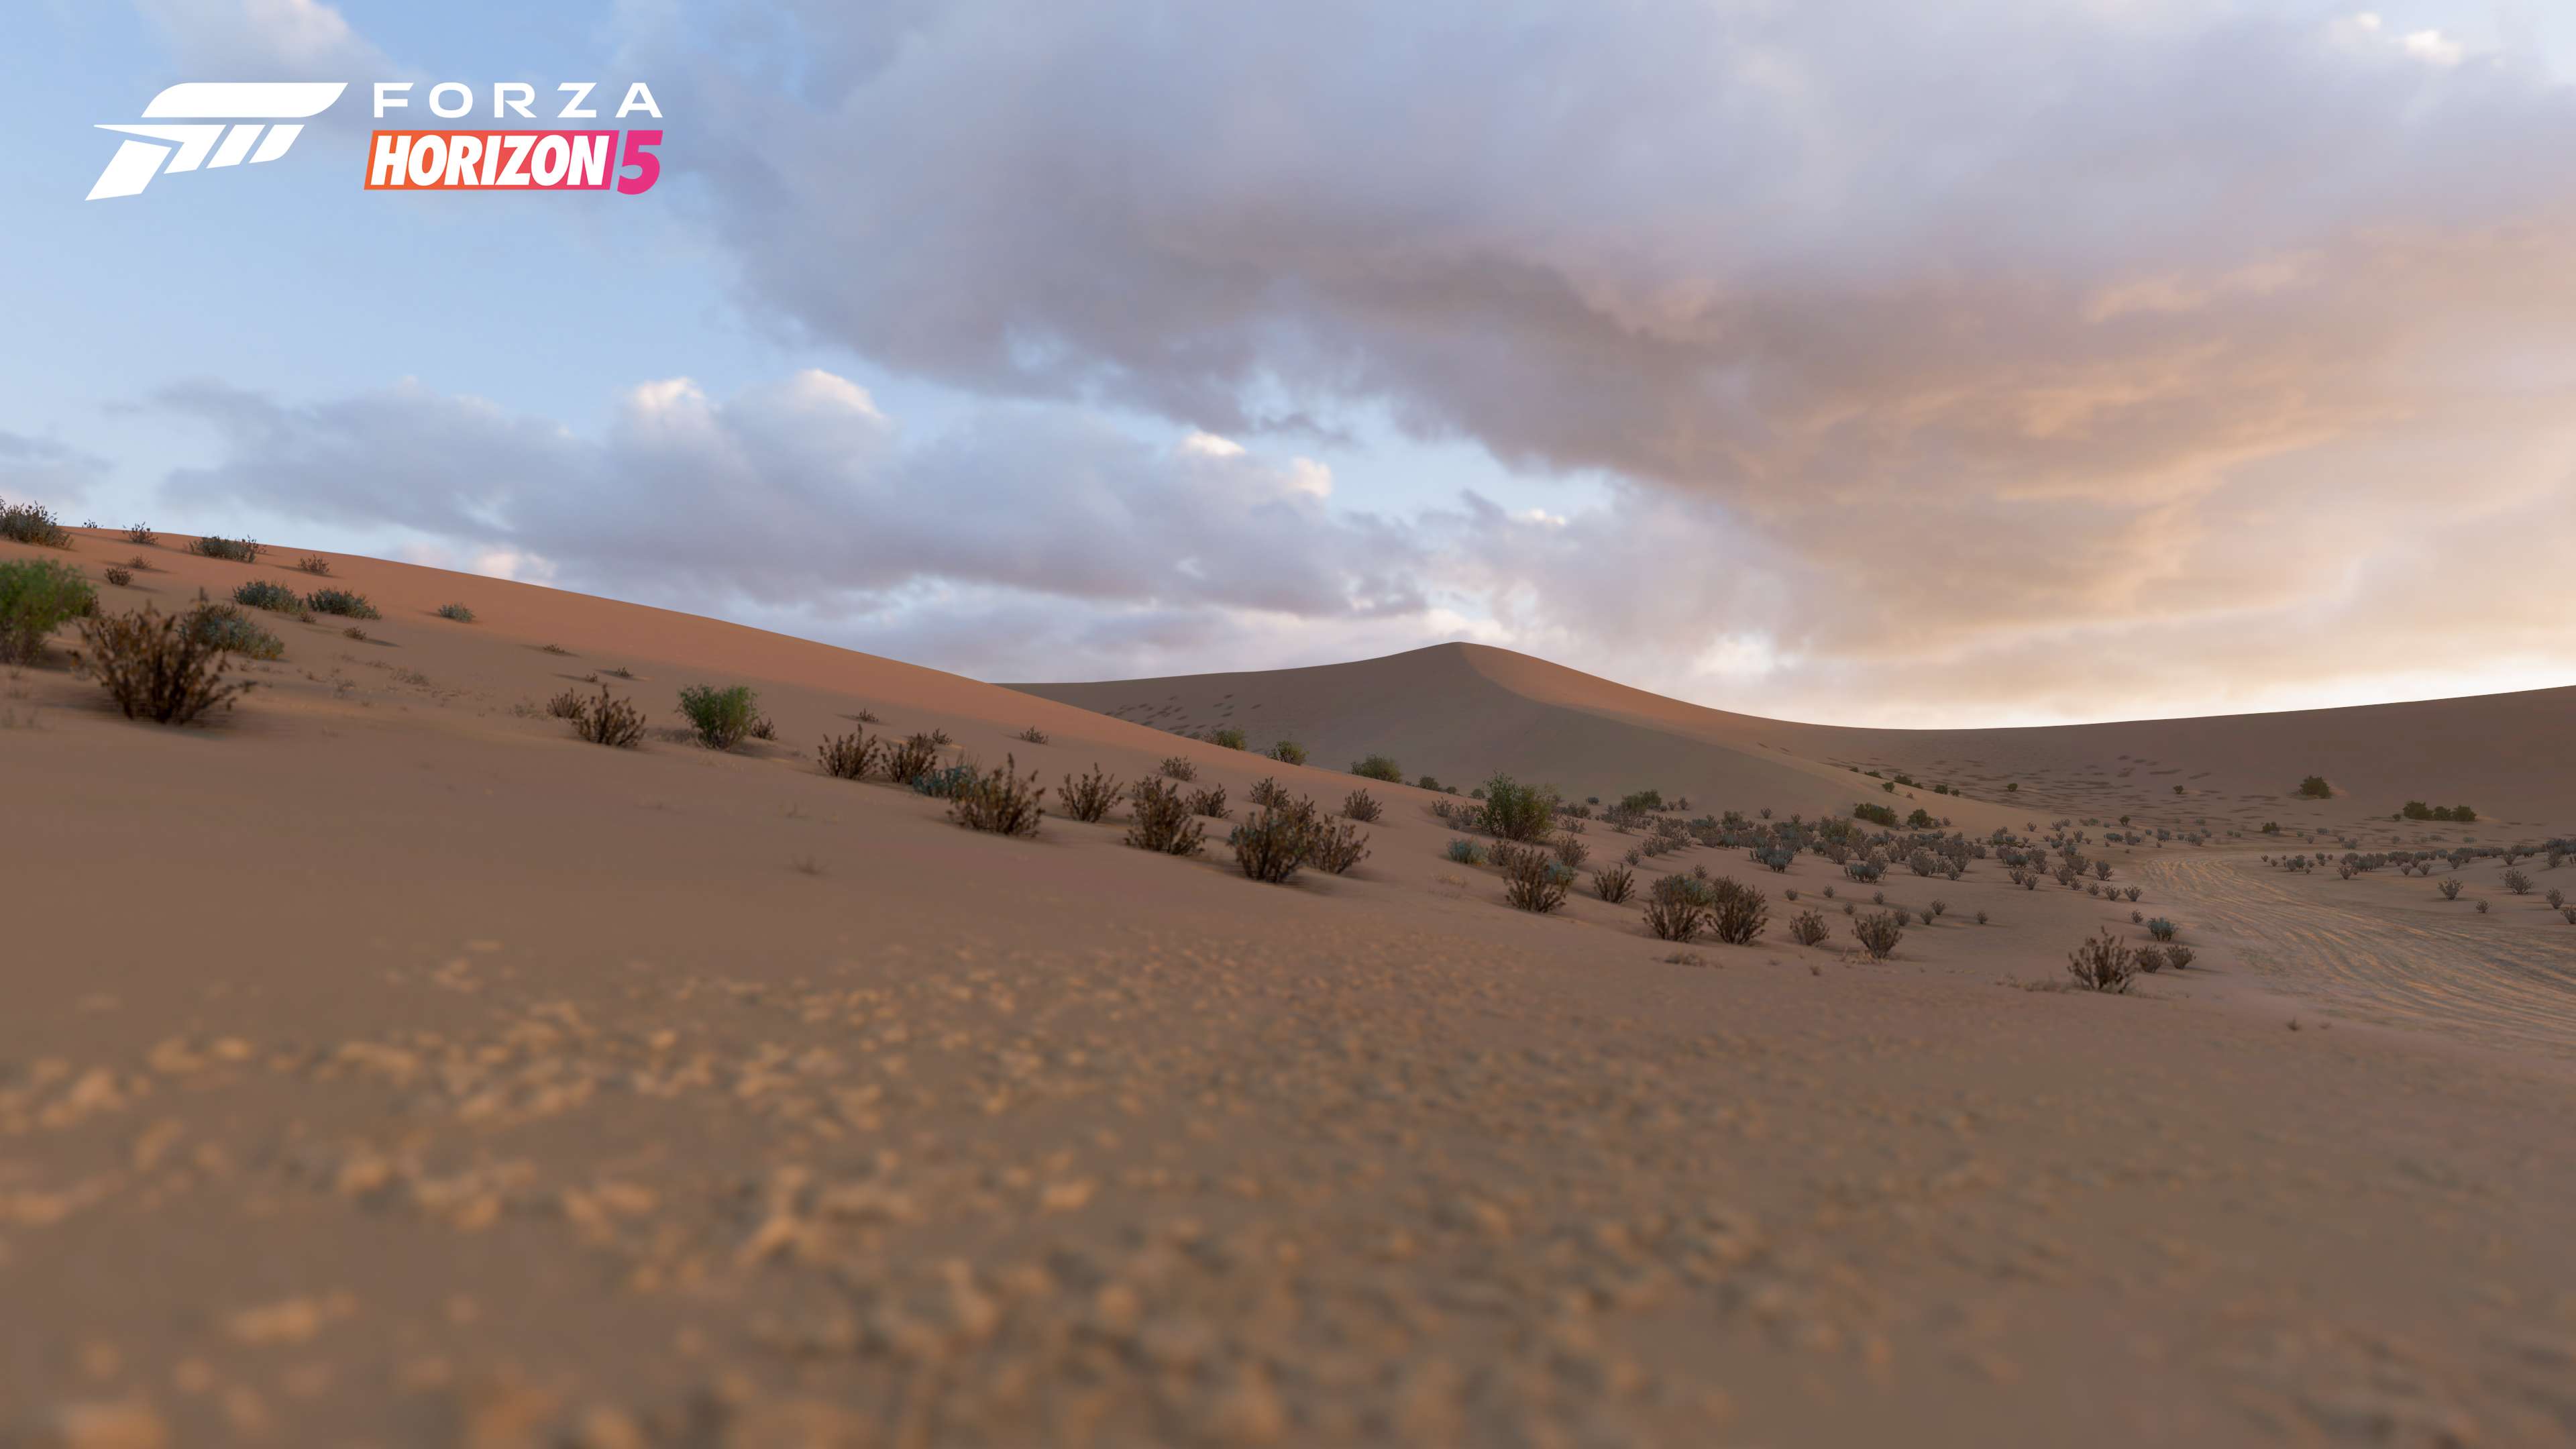 Forza-Horizon-5-screenshots-4K-5.jpg